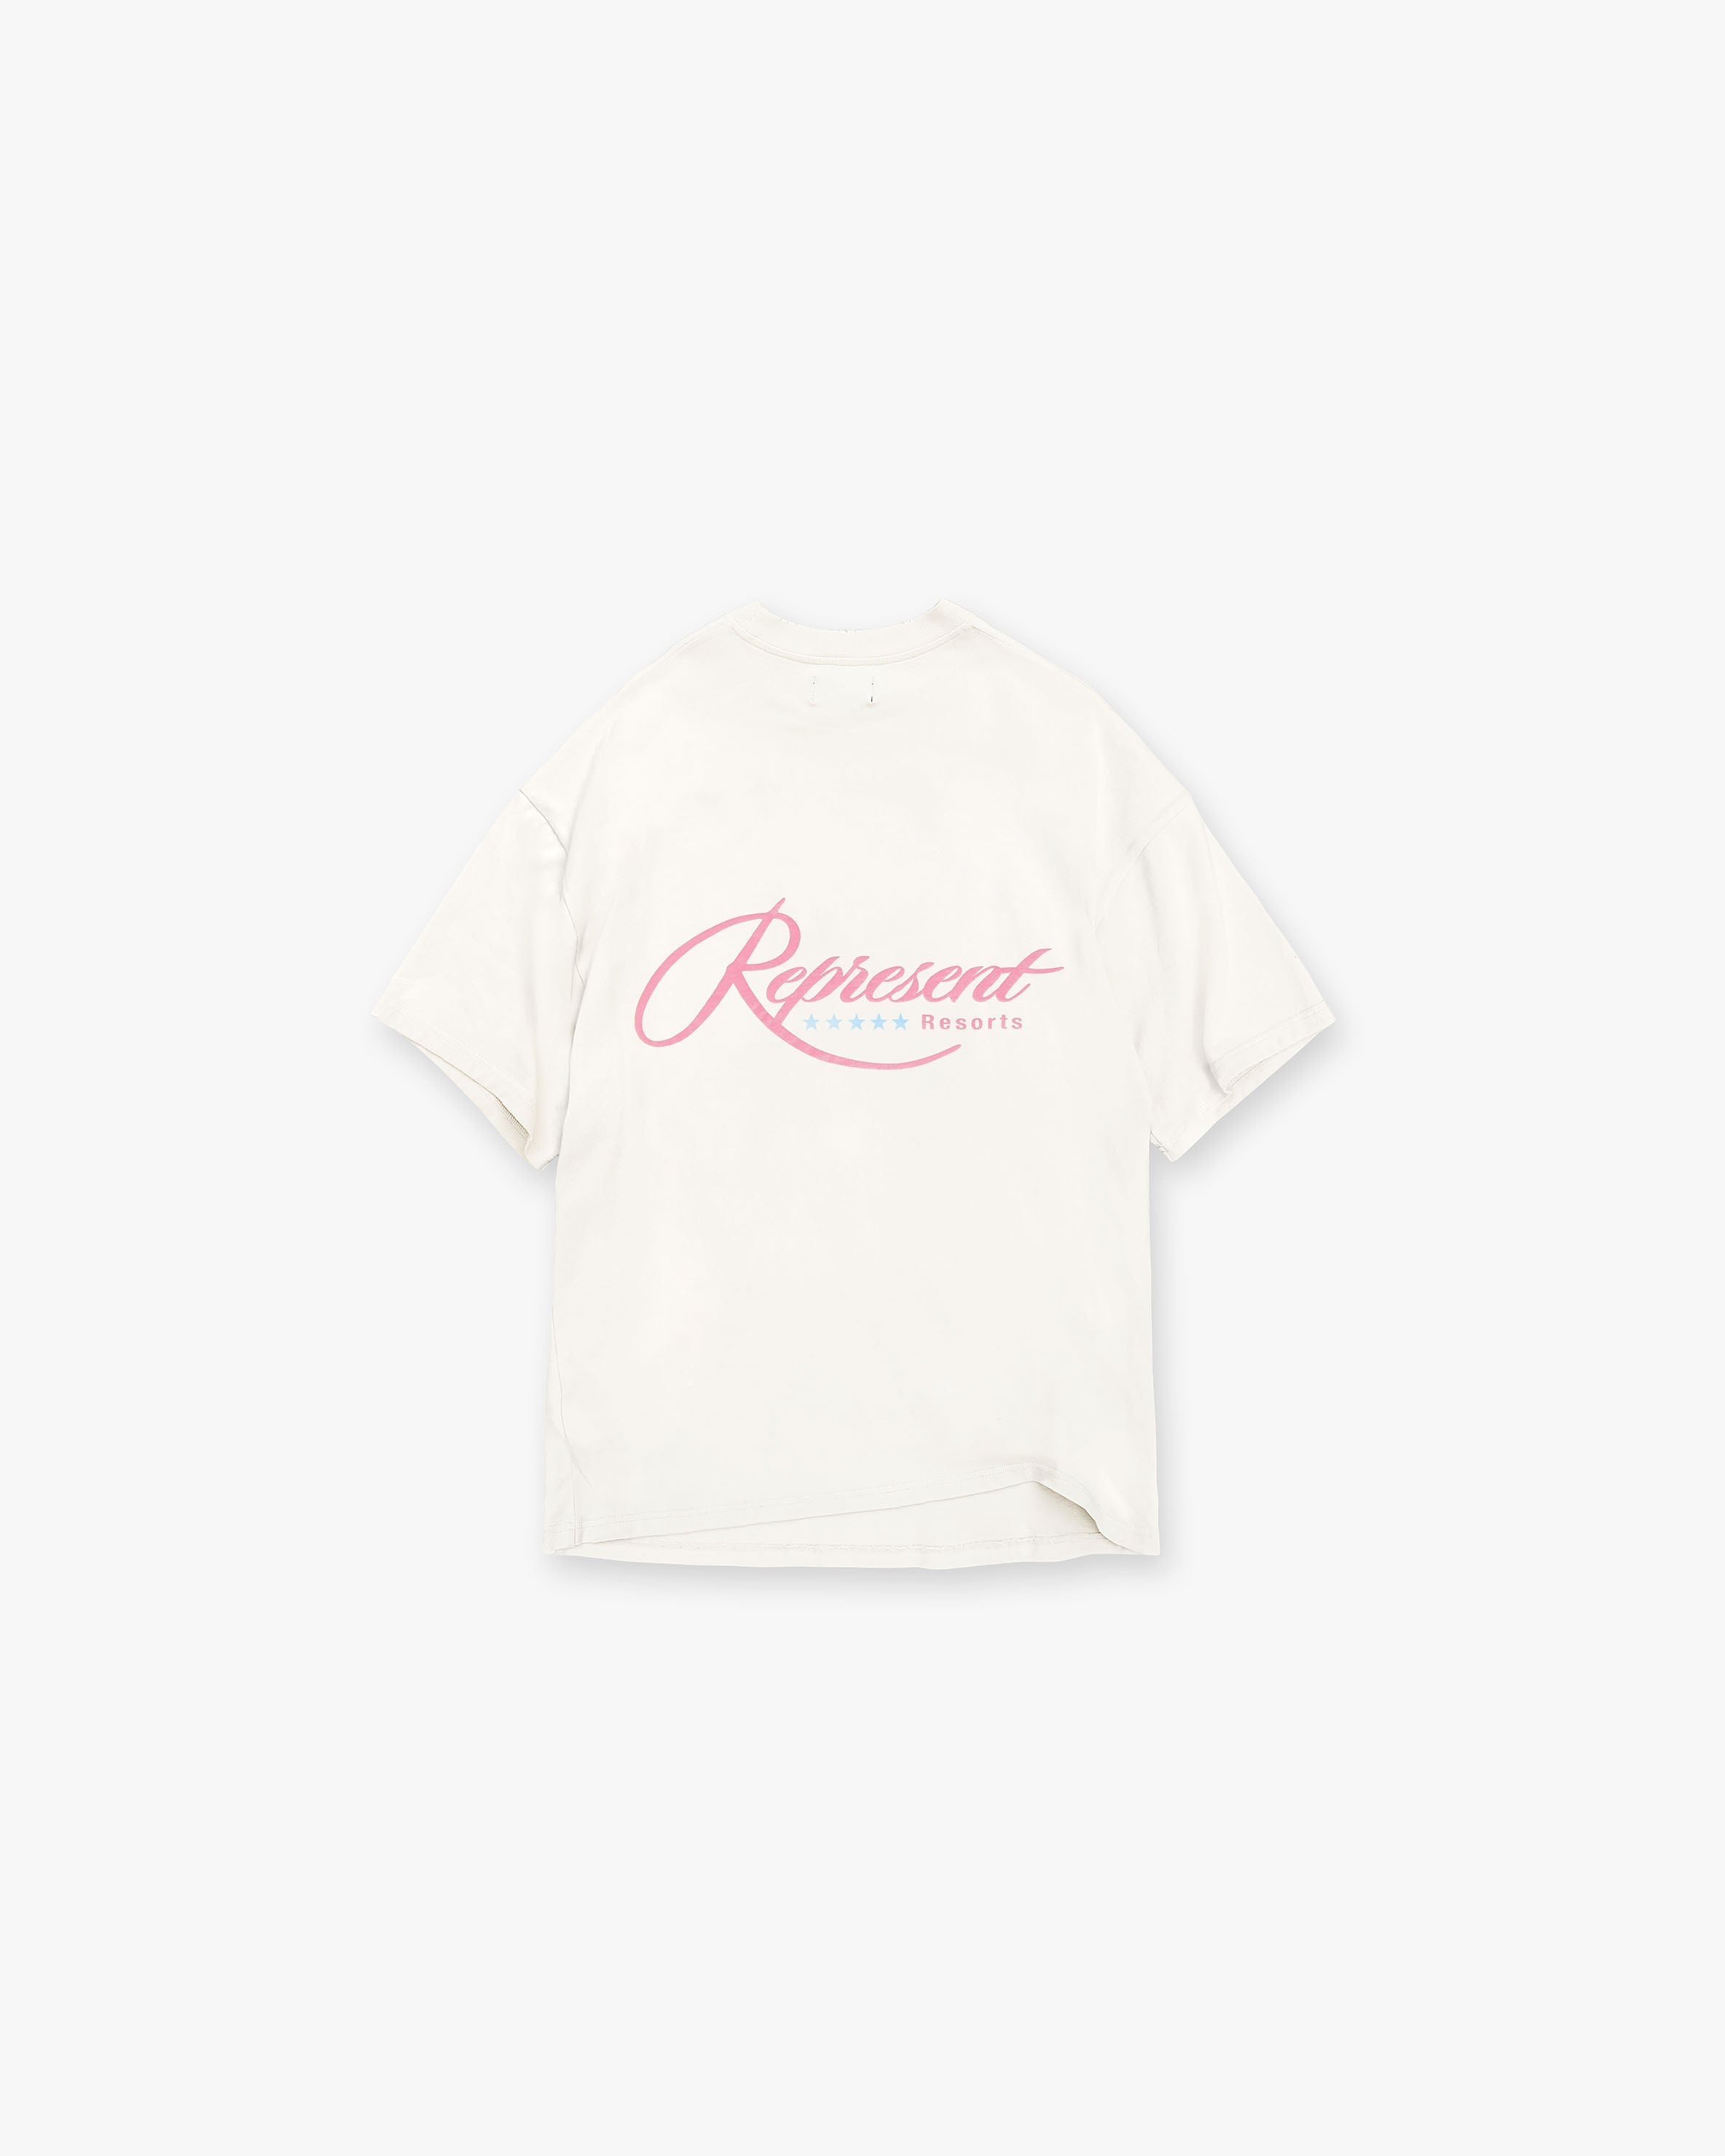 Resort T-Shirt | Flat White T-Shirts SC23 | Represent Clo